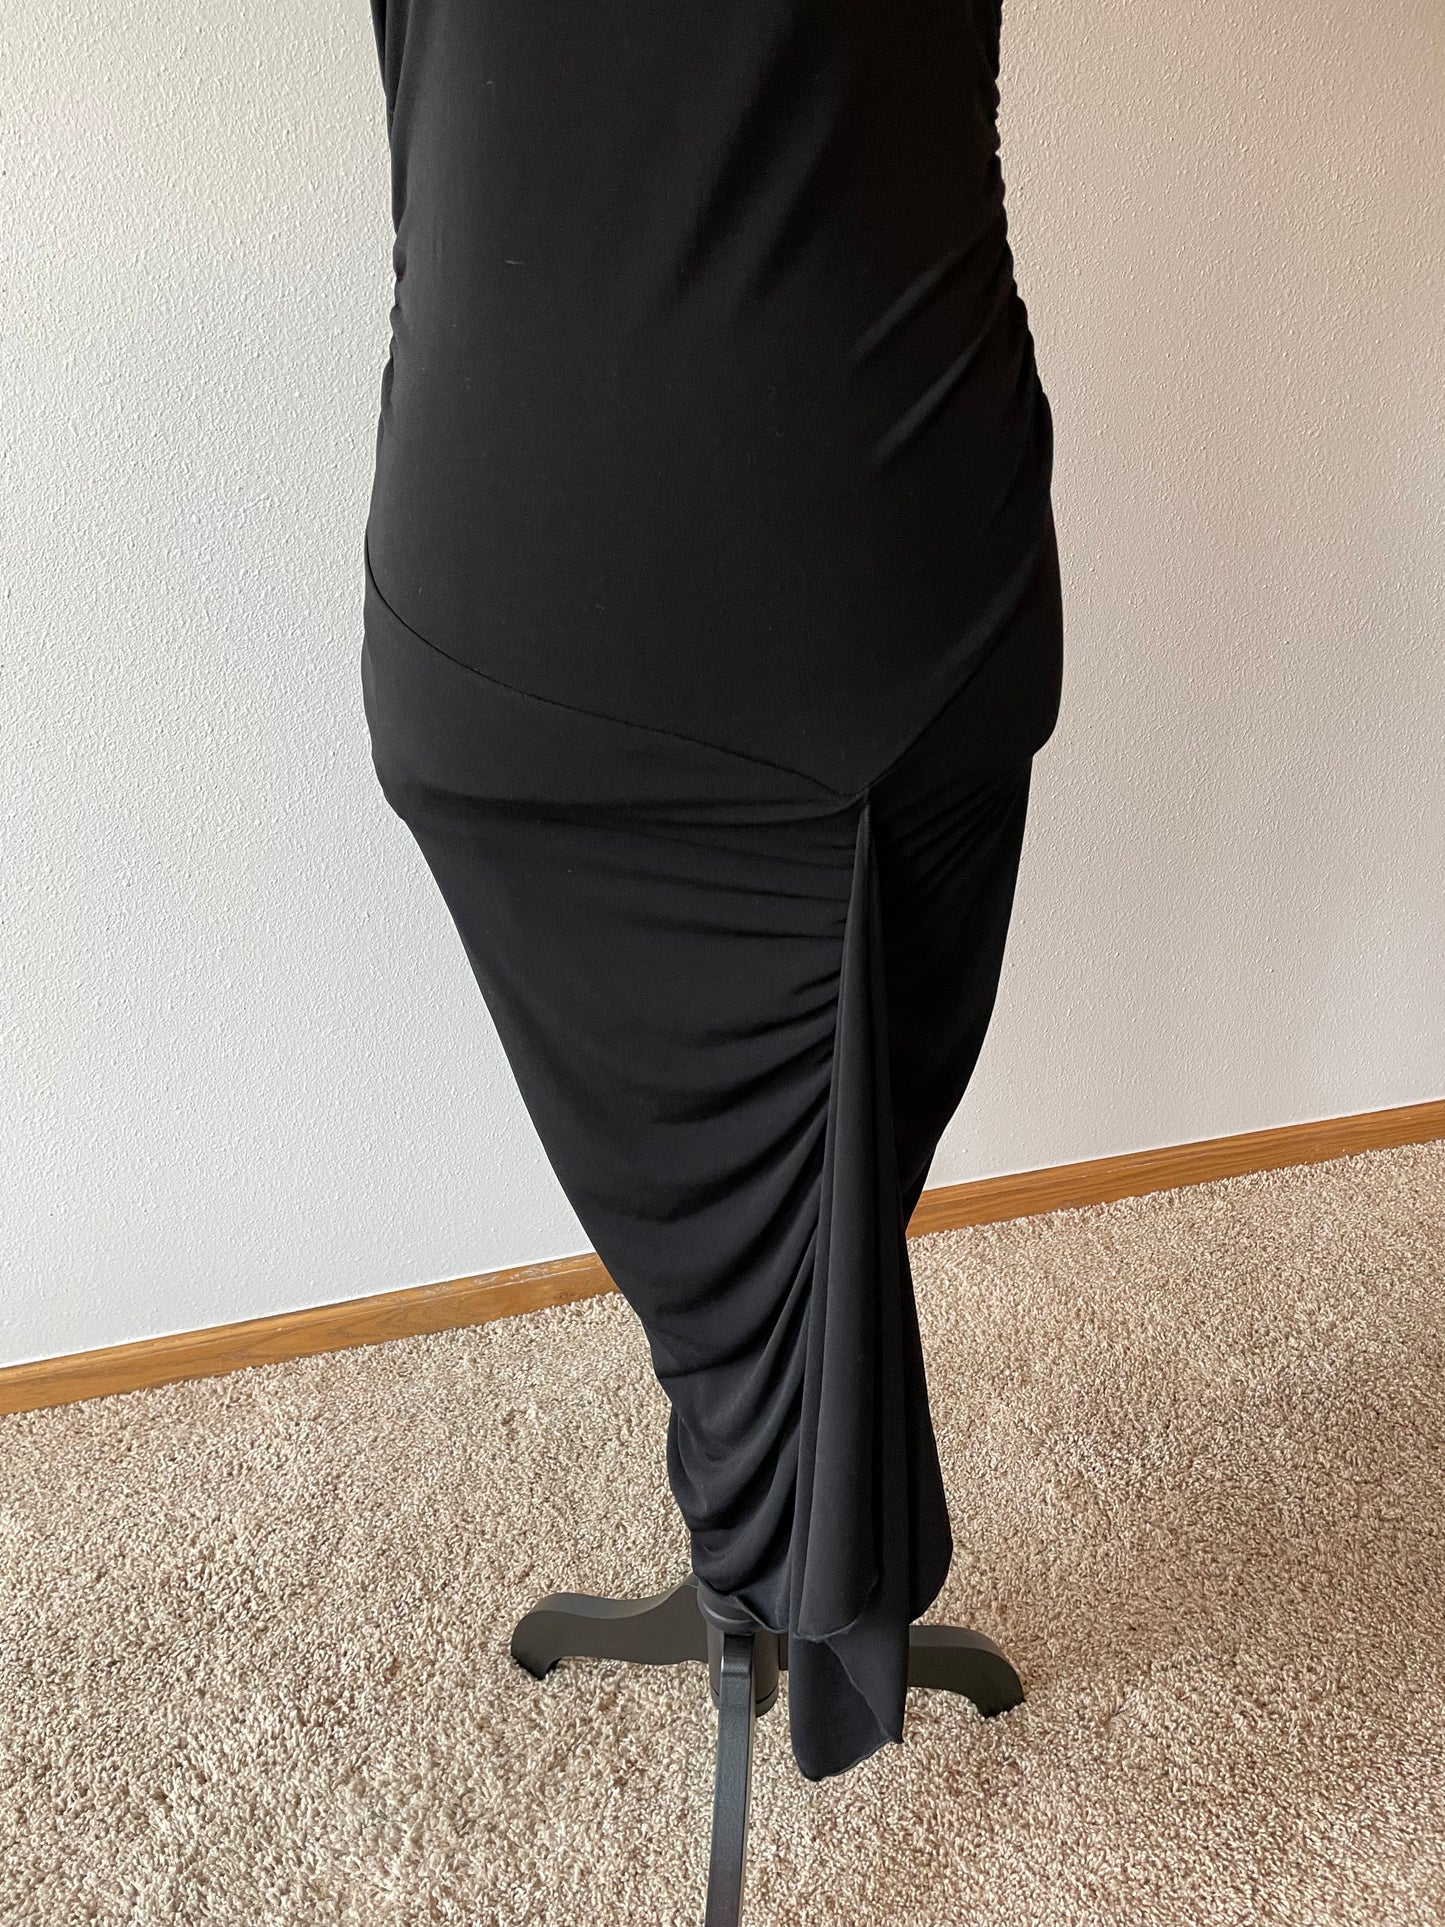 Ruby Rox Black Dress (M)